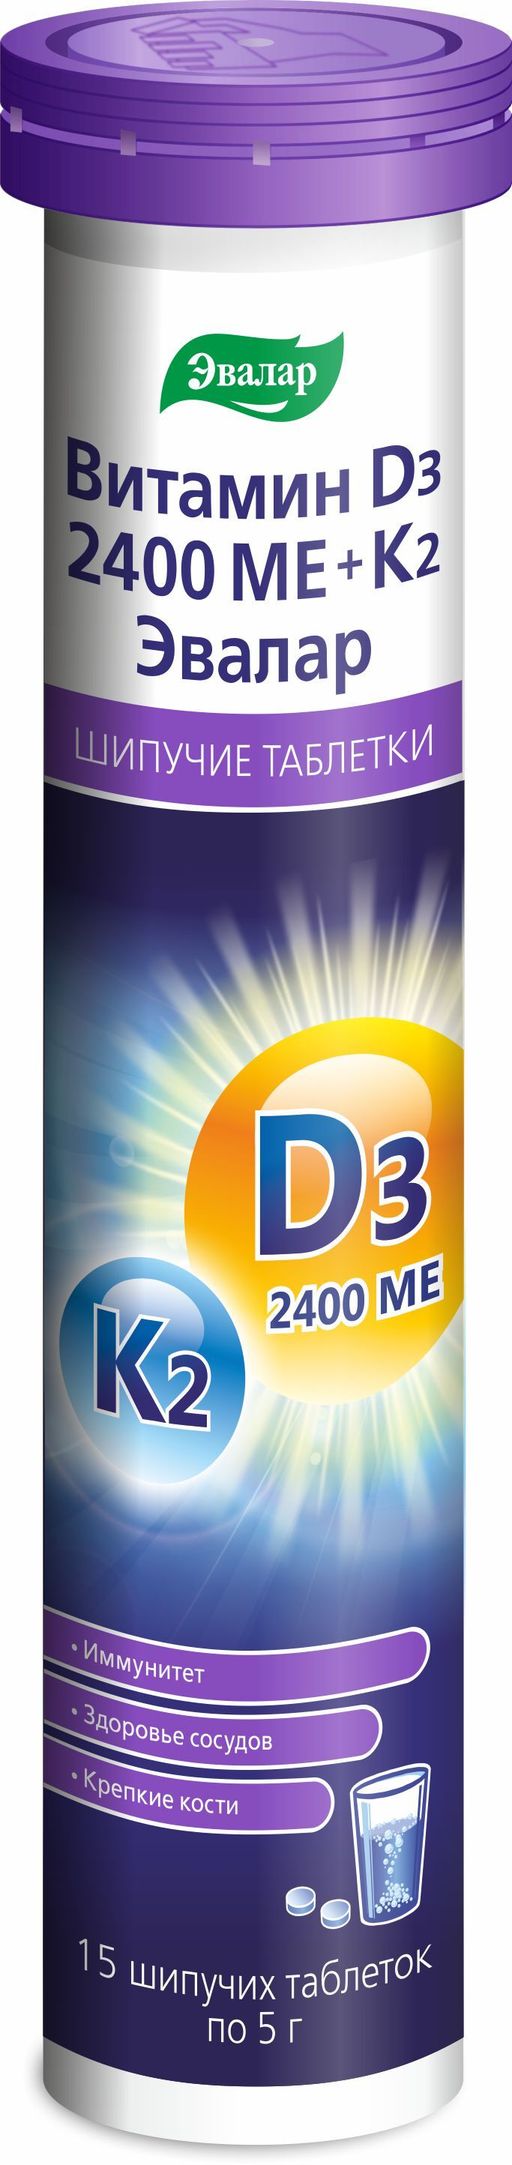 Витамин Д3 2400 МЕ + К2, 2400 МЕ, таблетки шипучие, 5 г, 15 шт.